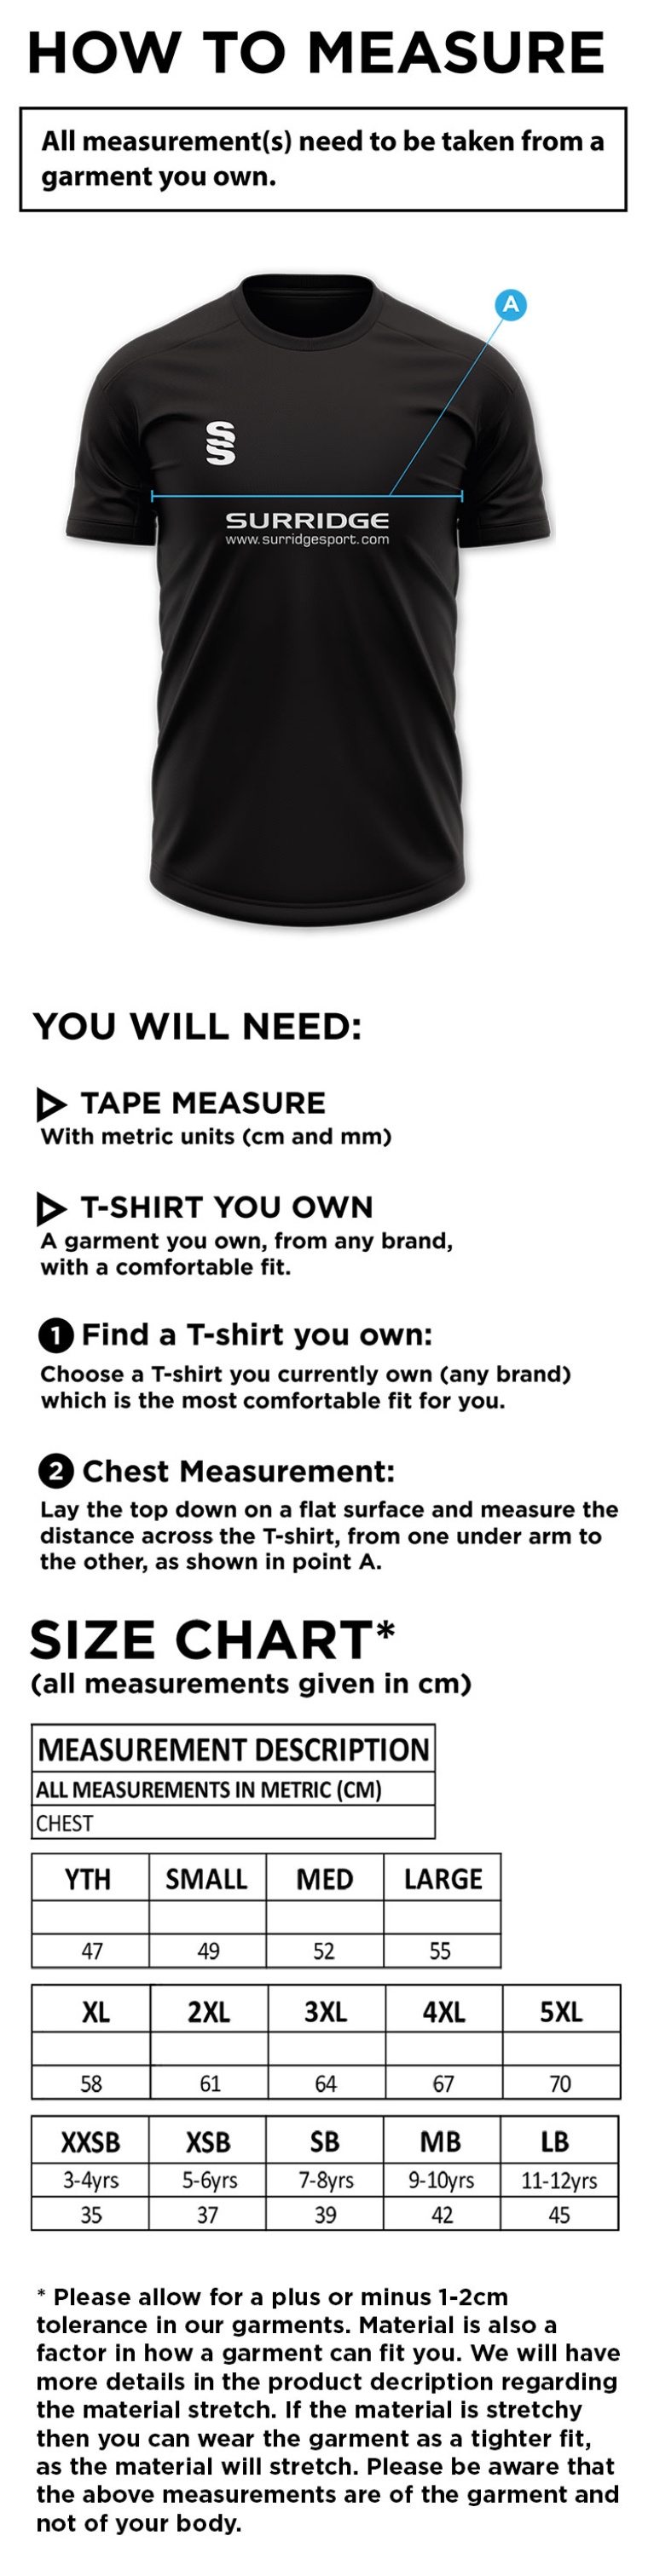 Women's Blade Polo Shirt : Navy / Royal / White - Size Guide